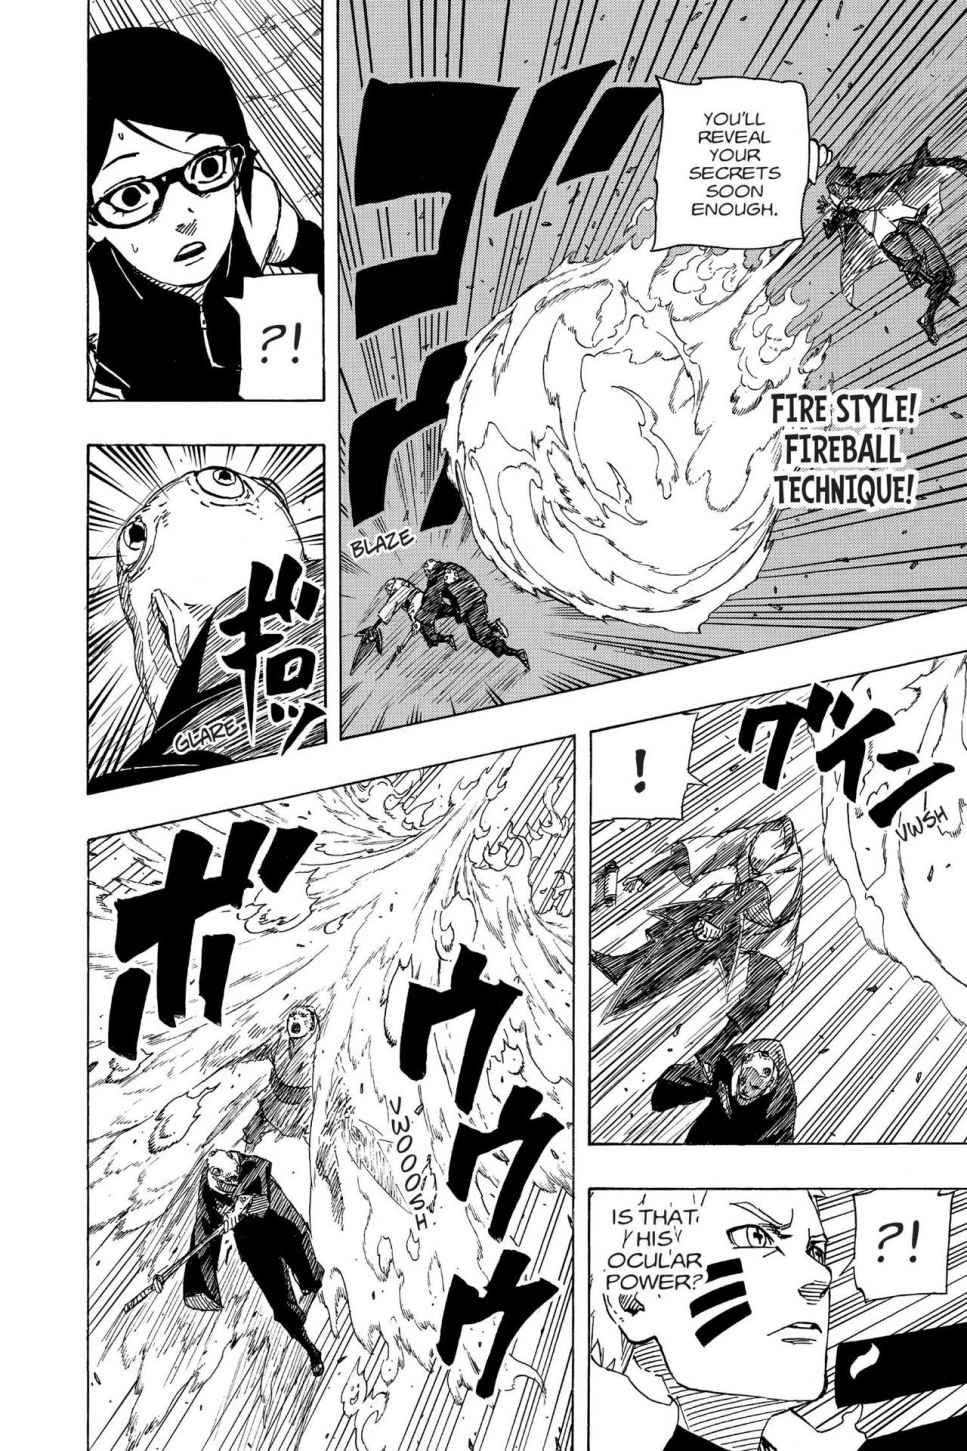 Sasuke MS vs Sakura adulta. - Página 5 0006-004